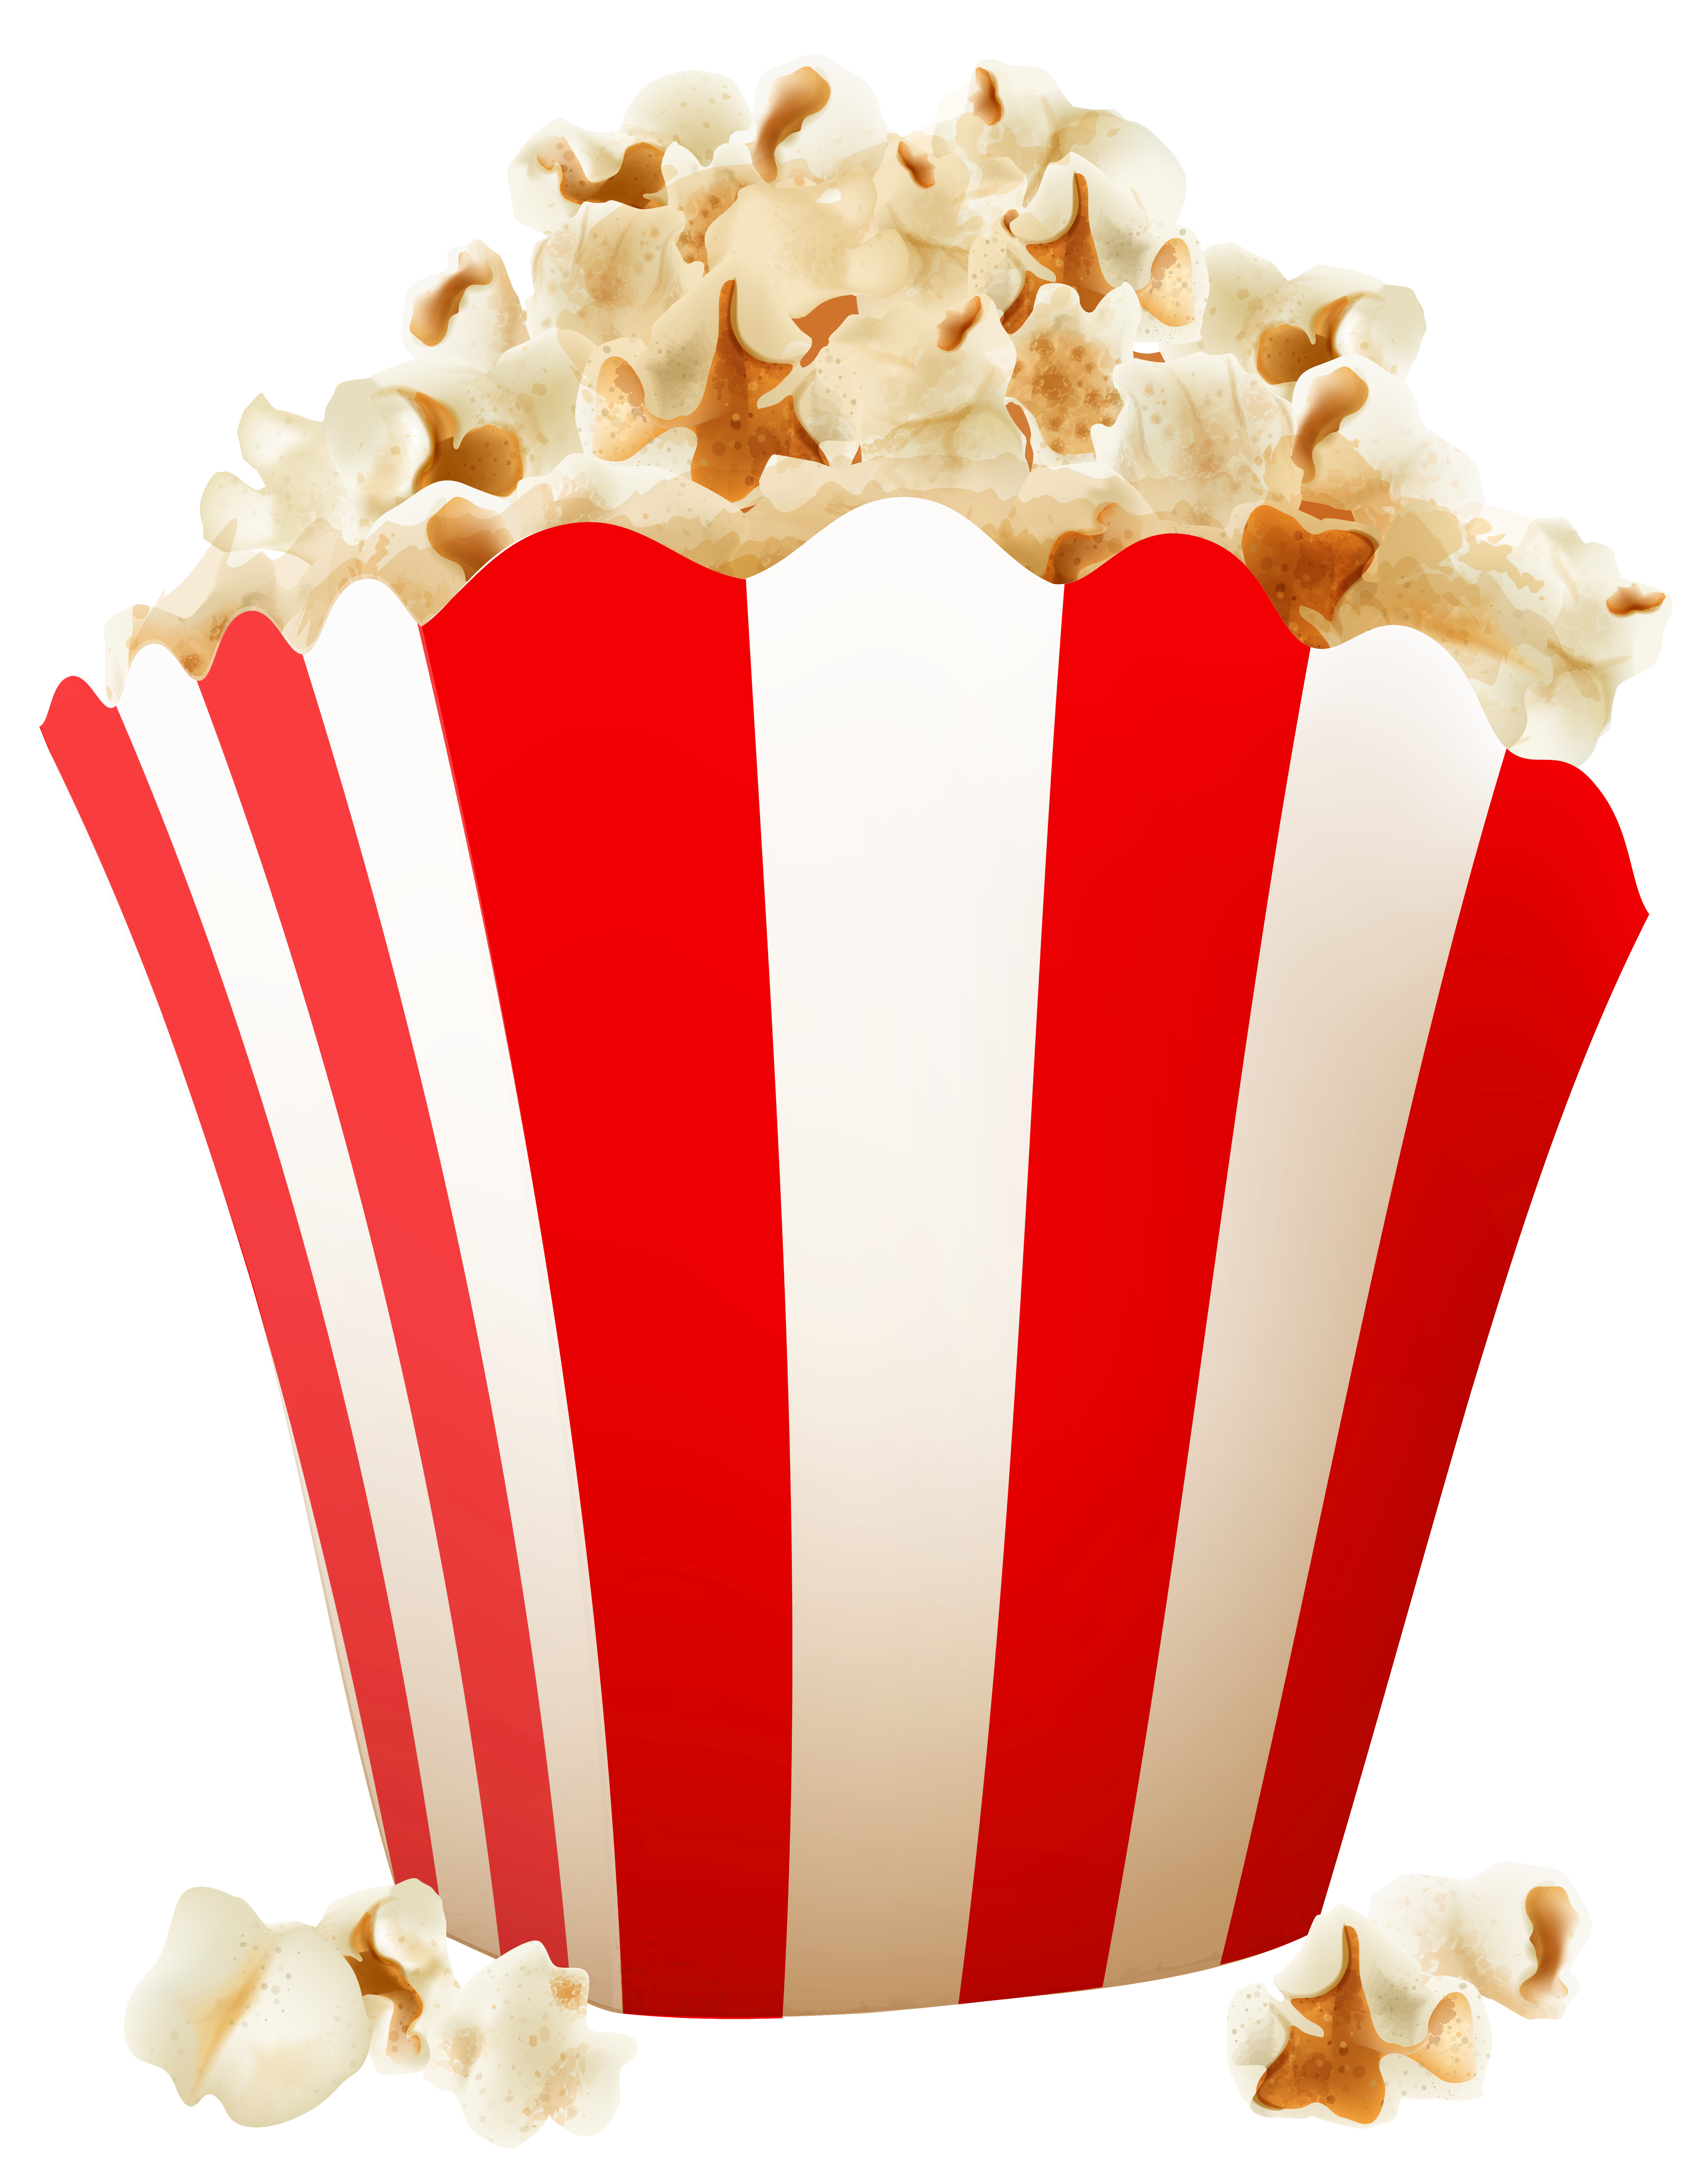 clipart movie popcorn - photo #48